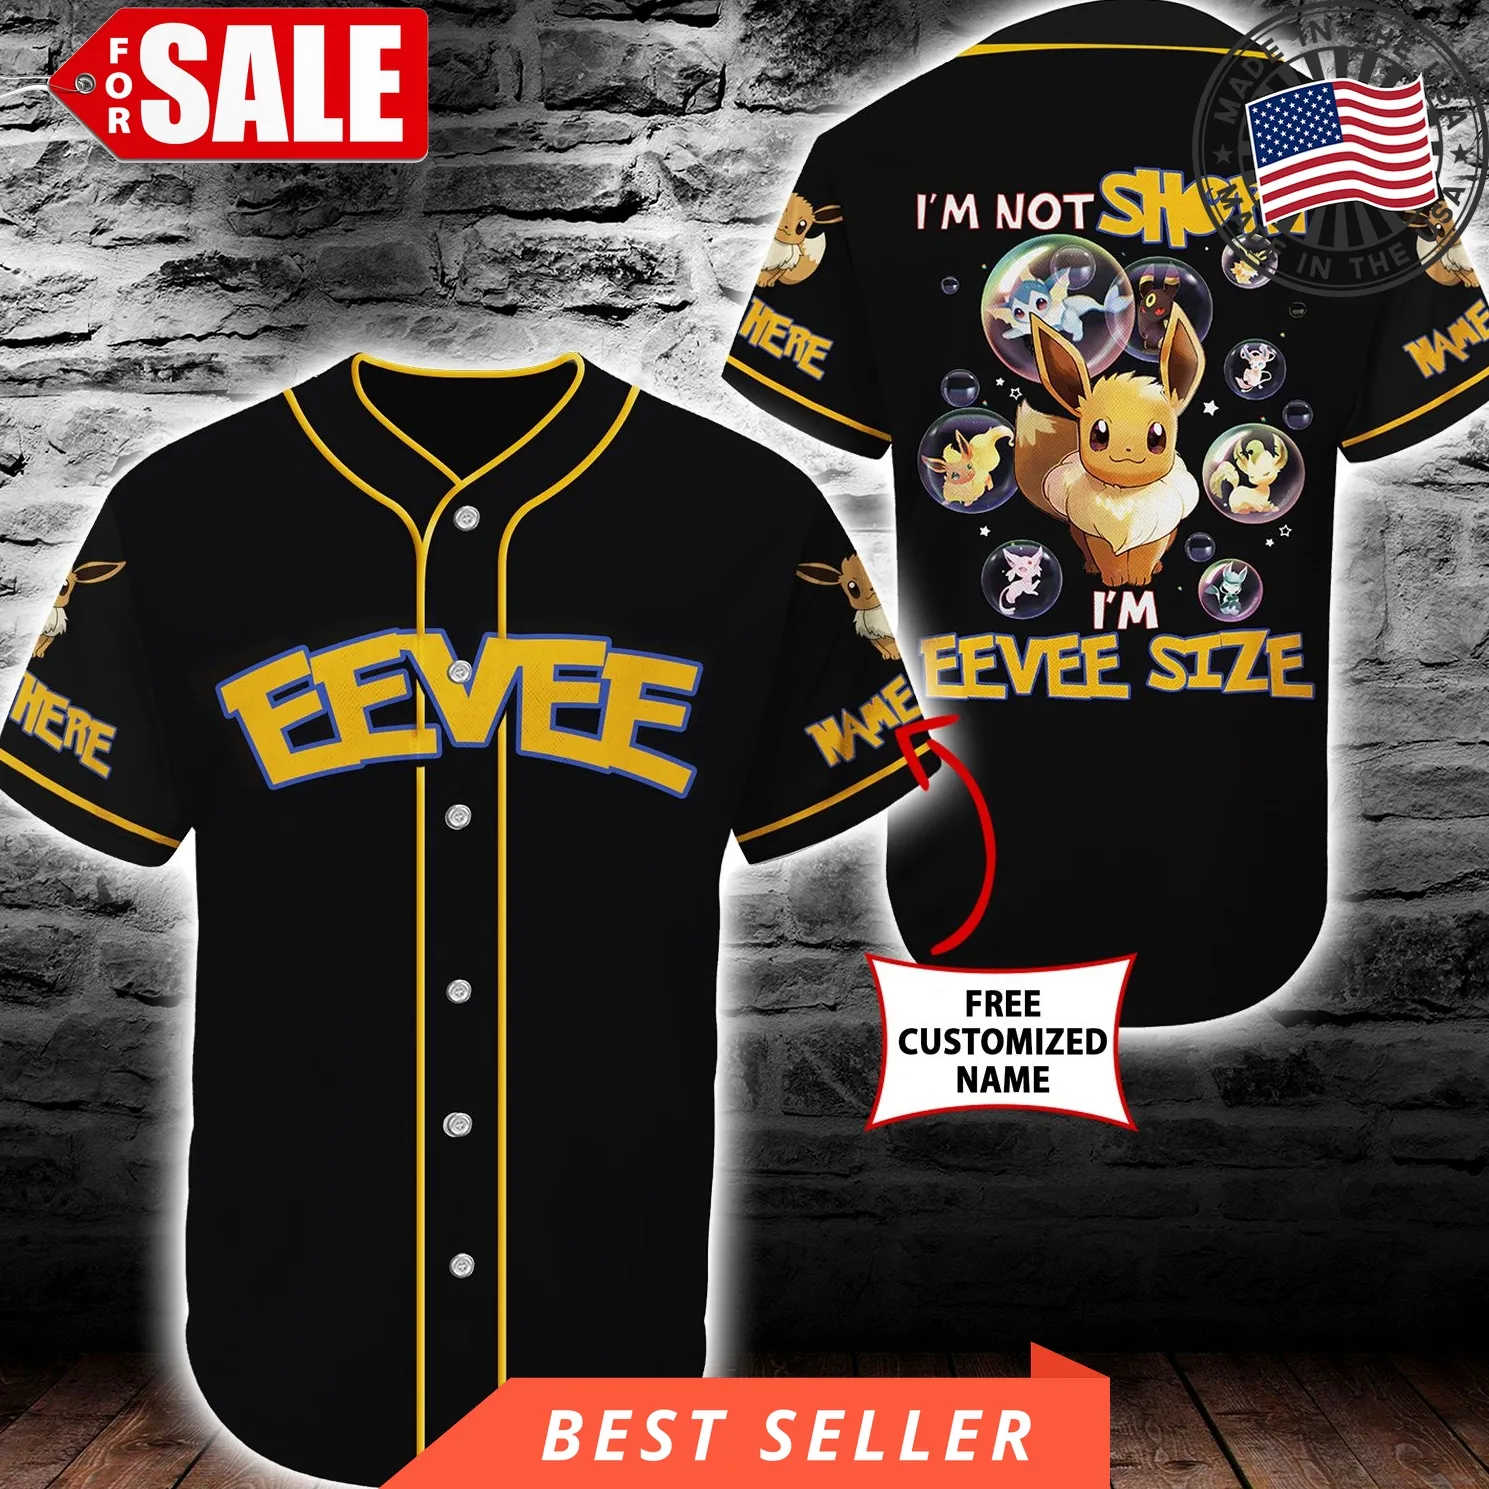 Eevee Size Baseball Tee Jersey Shirt Black (Personalized Custom Name) Unisex Men Women